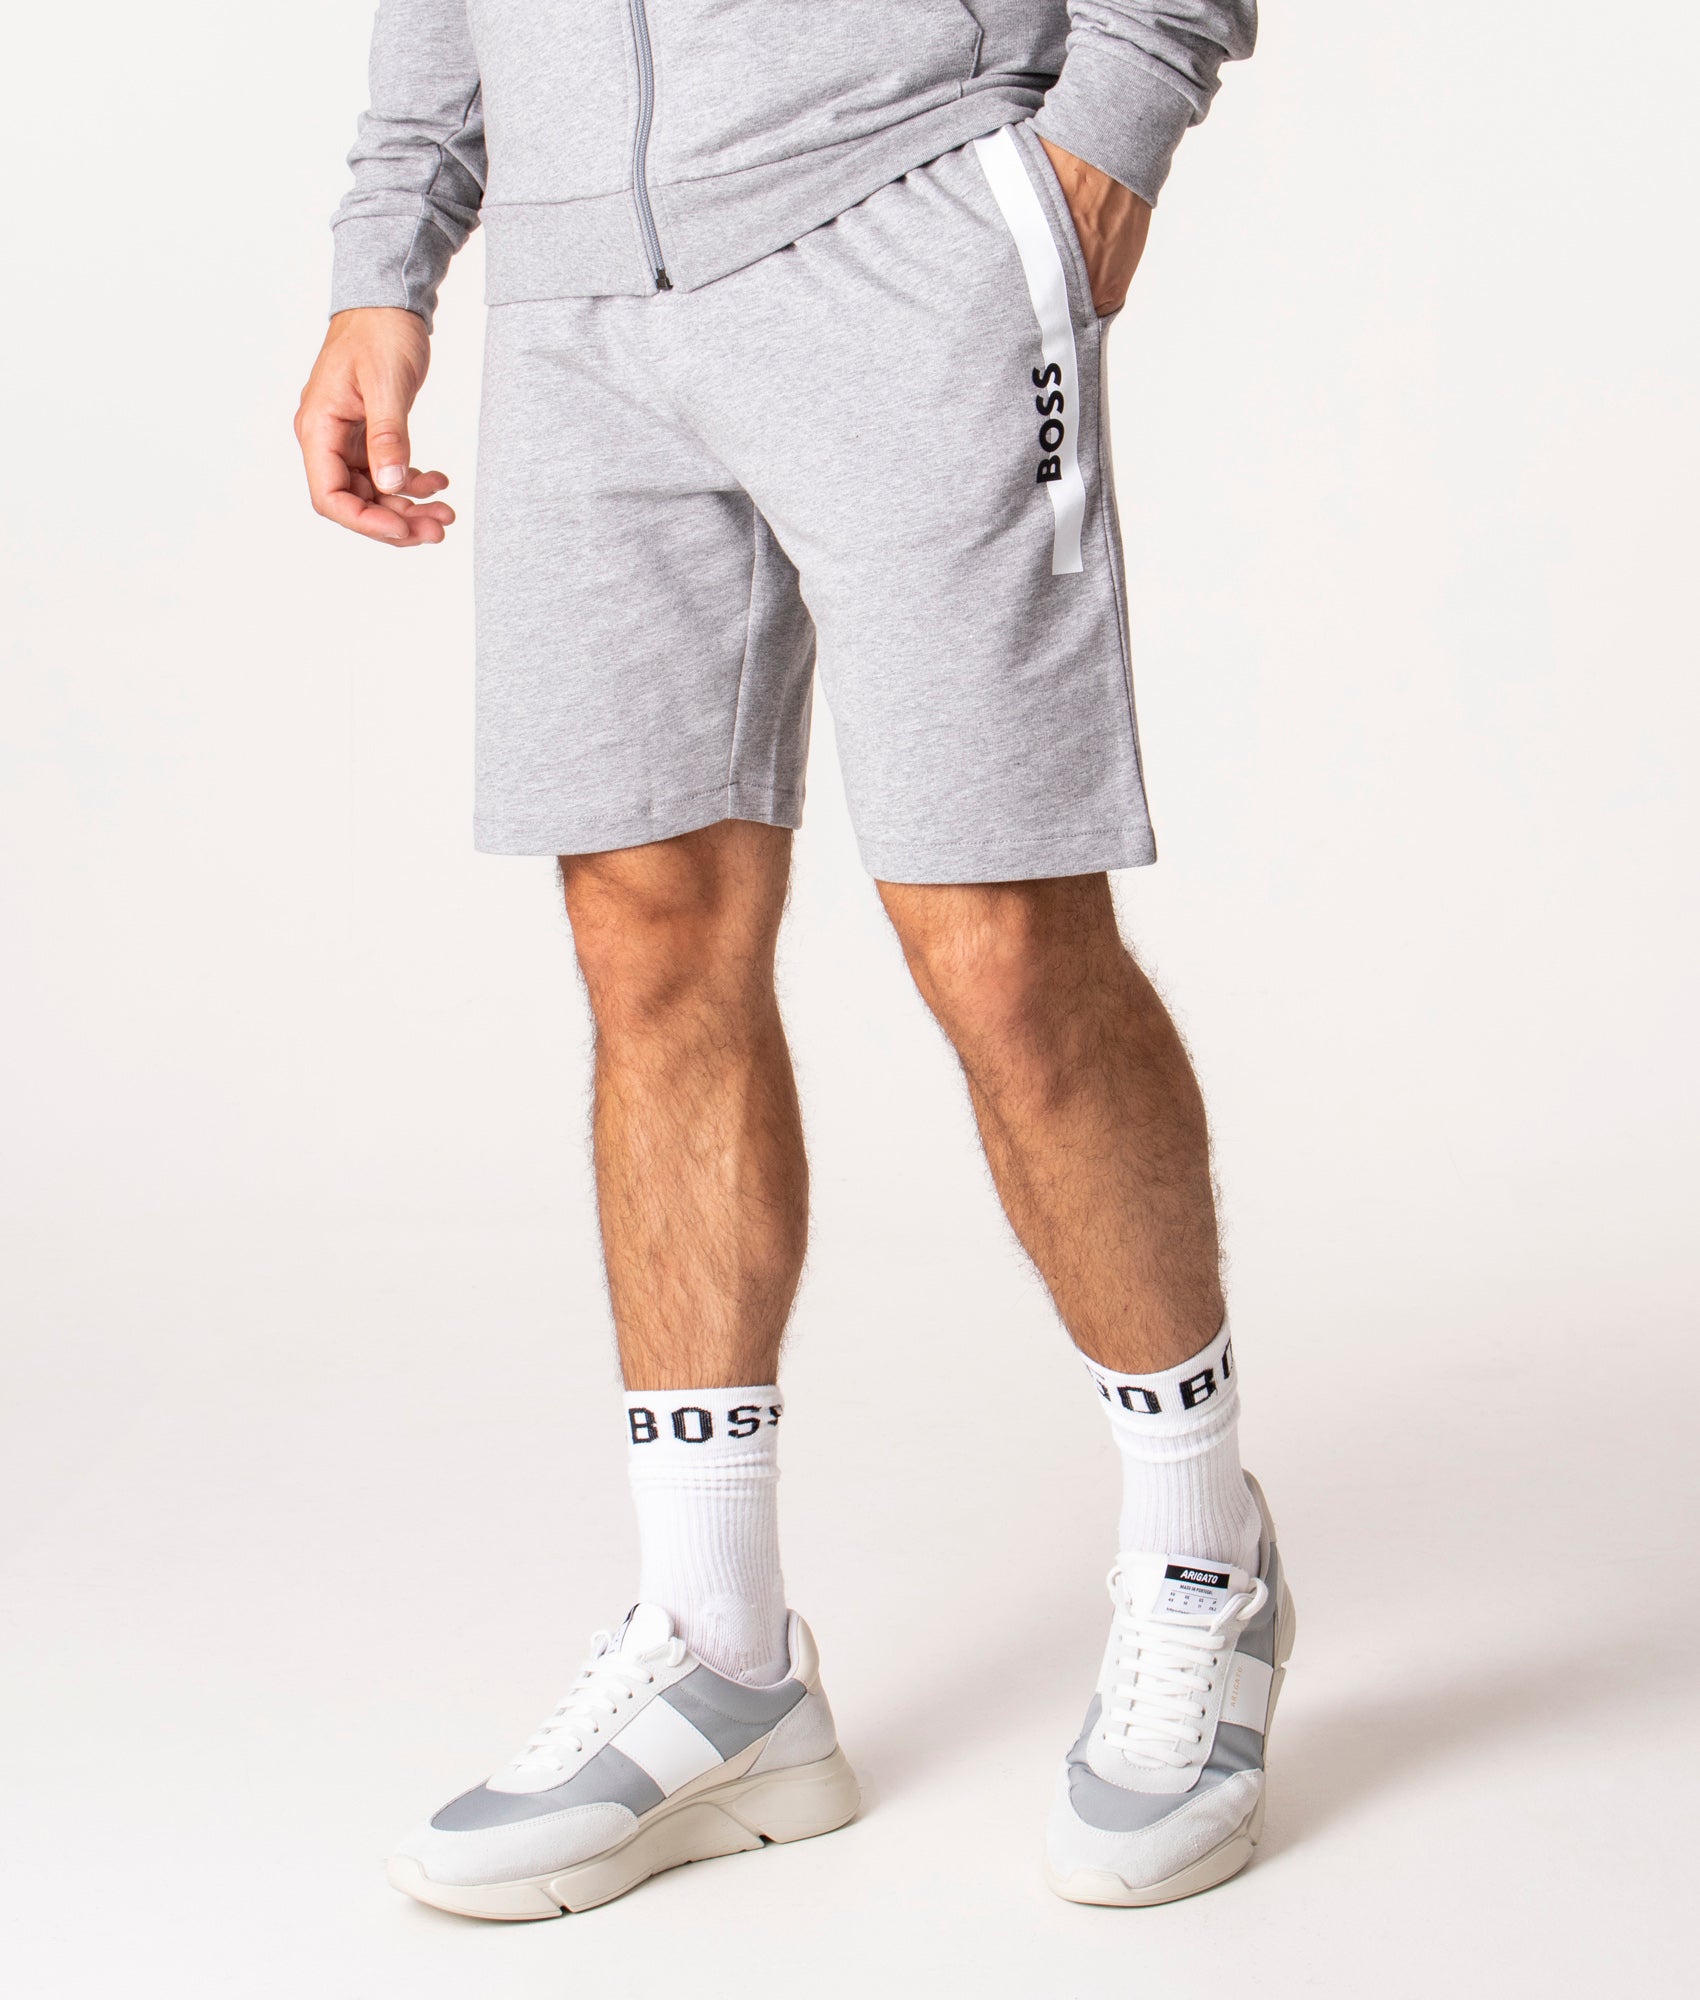 Regular Fit Authentic Lightweight Sweat Shorts, BOSS